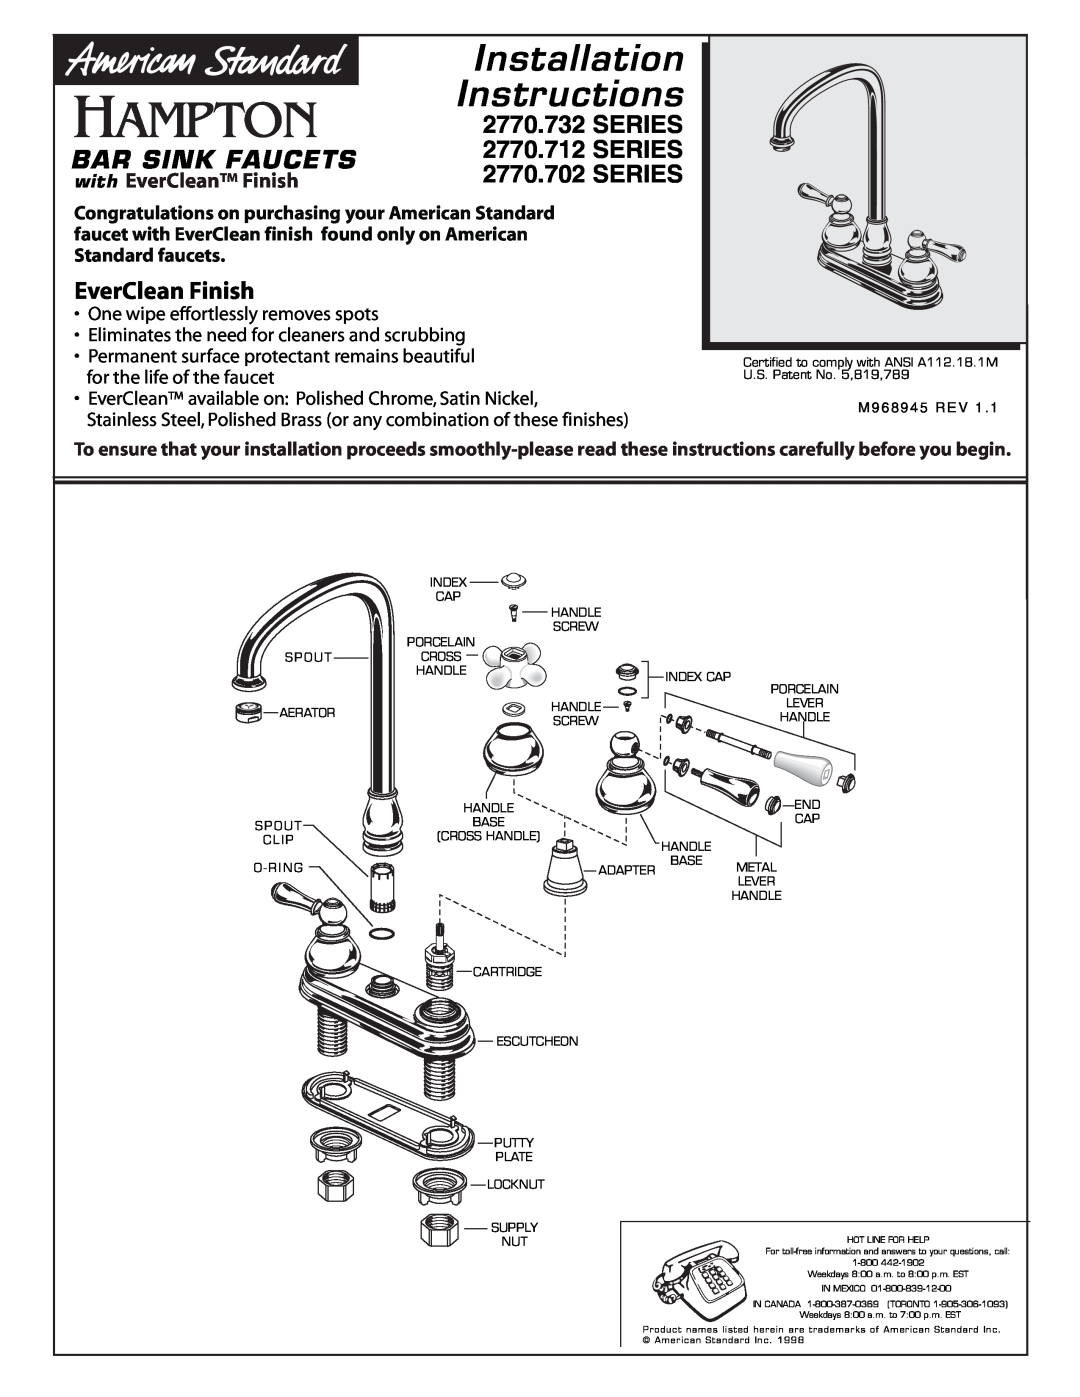 American Standard 2770.712 Series installation instructions Installation Instructions, Bar Sink Faucets, EverClean Finish 